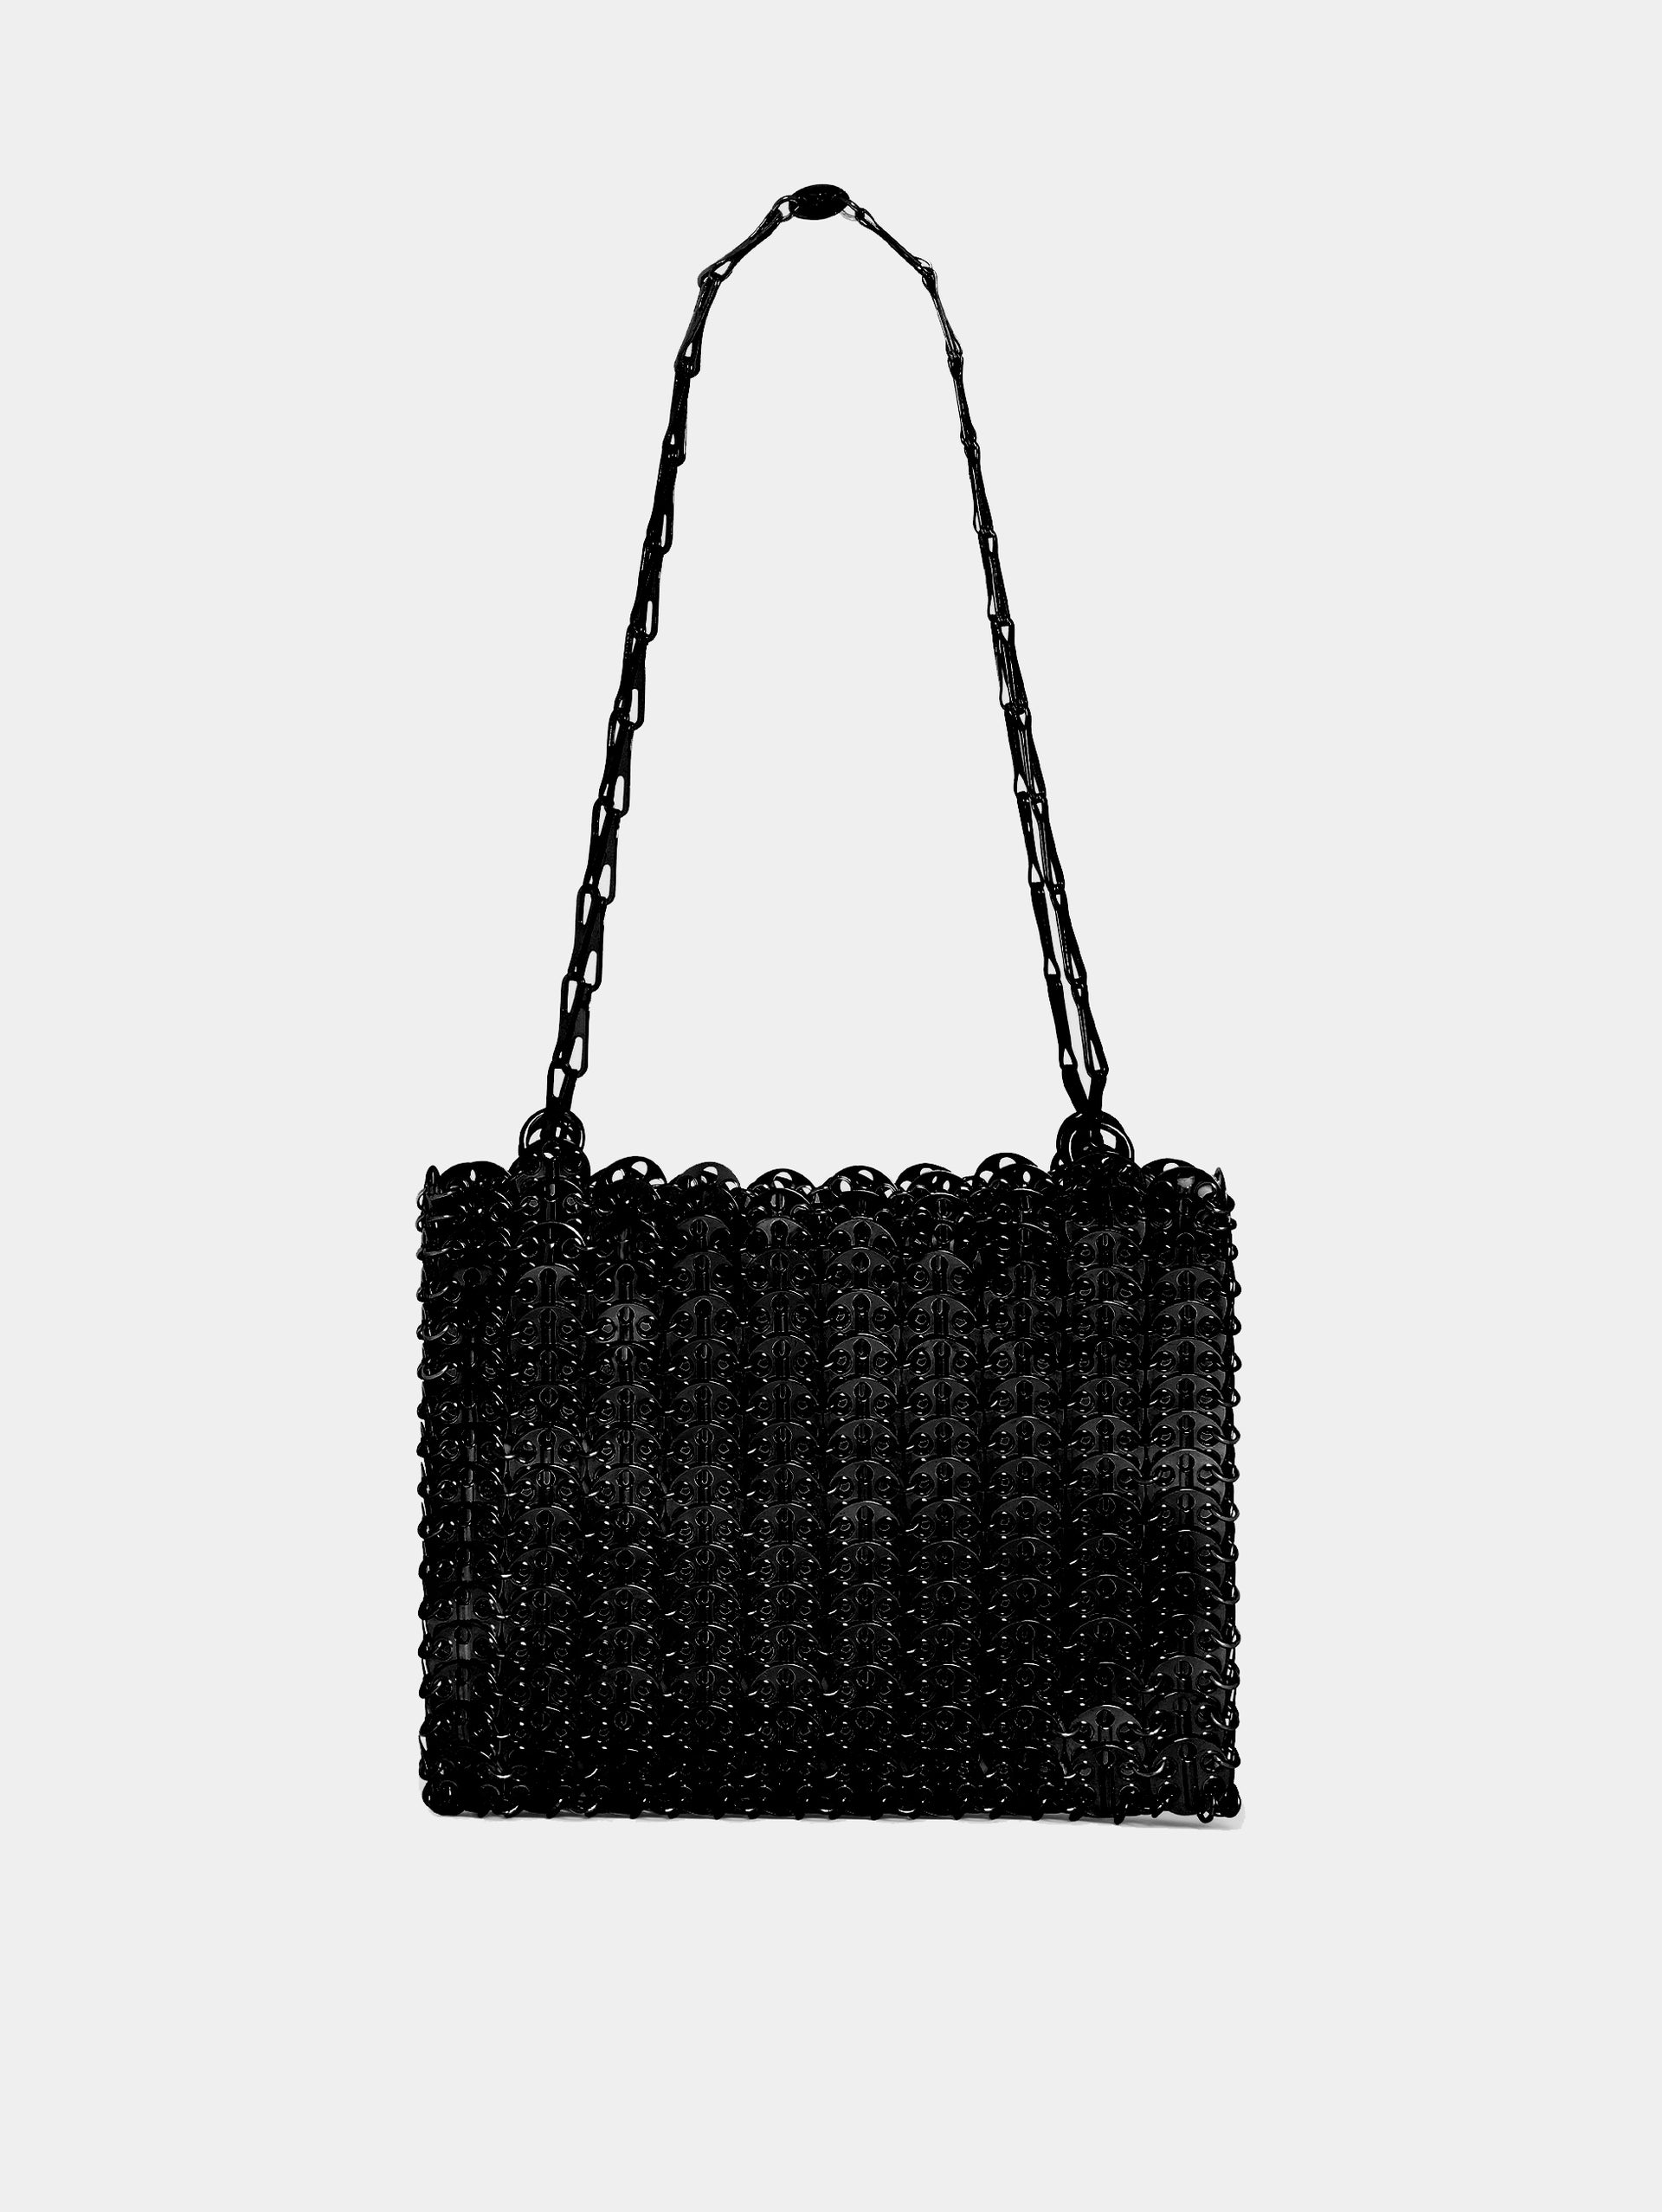 Iconic black 1969 Bag